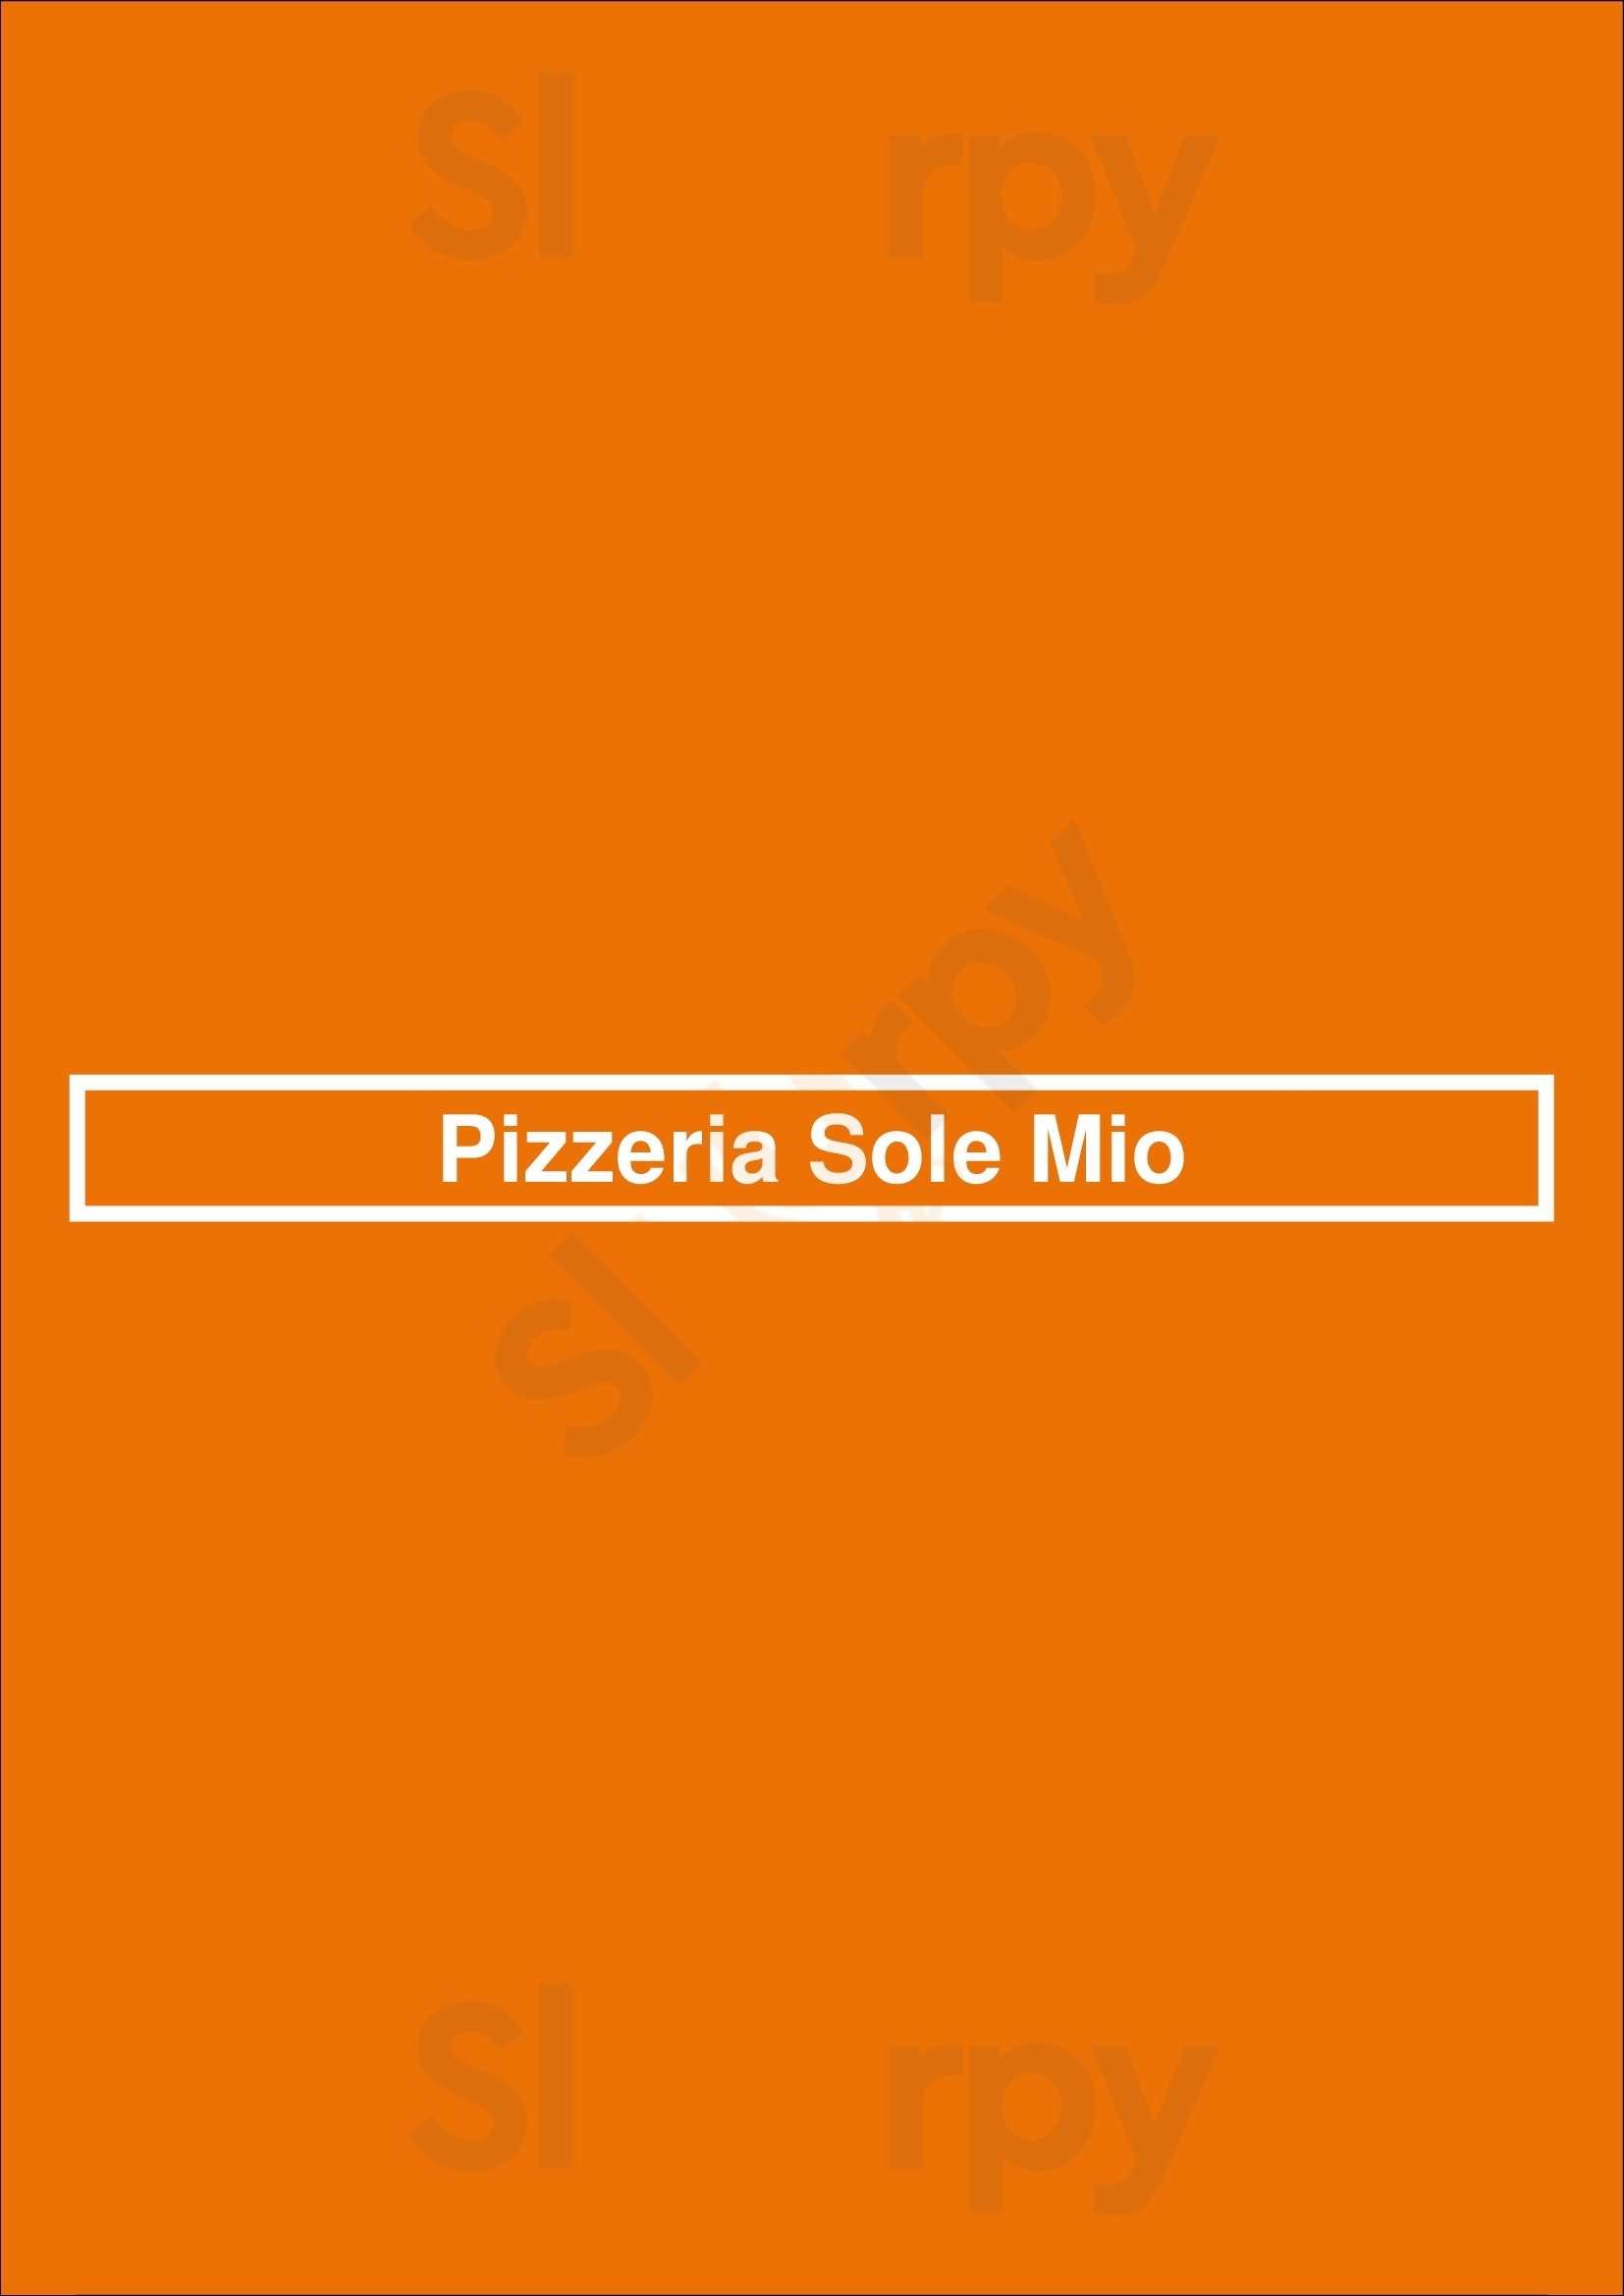 Pizzeria Sole Mio Matosinhos Menu - 1